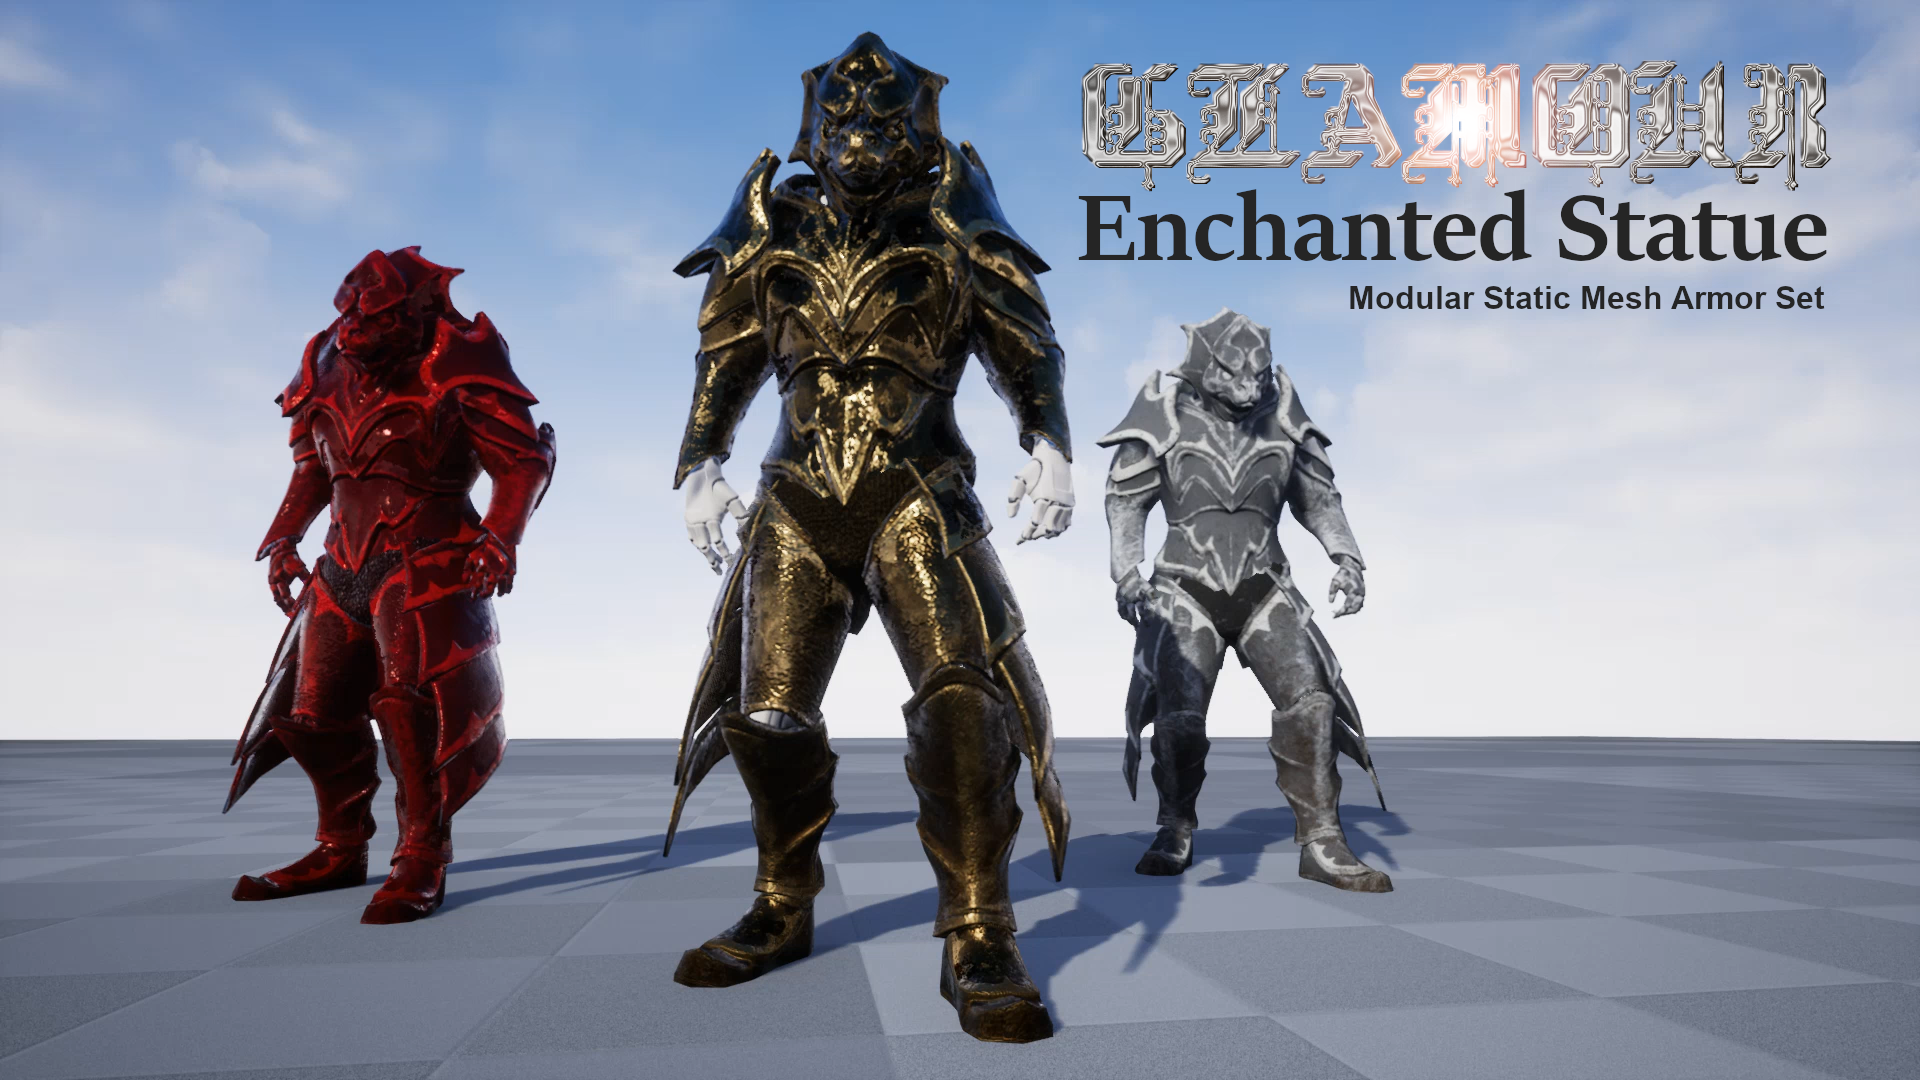 GLAMOUR: Enchanted Statue - Modular Static Mesh Armor Set